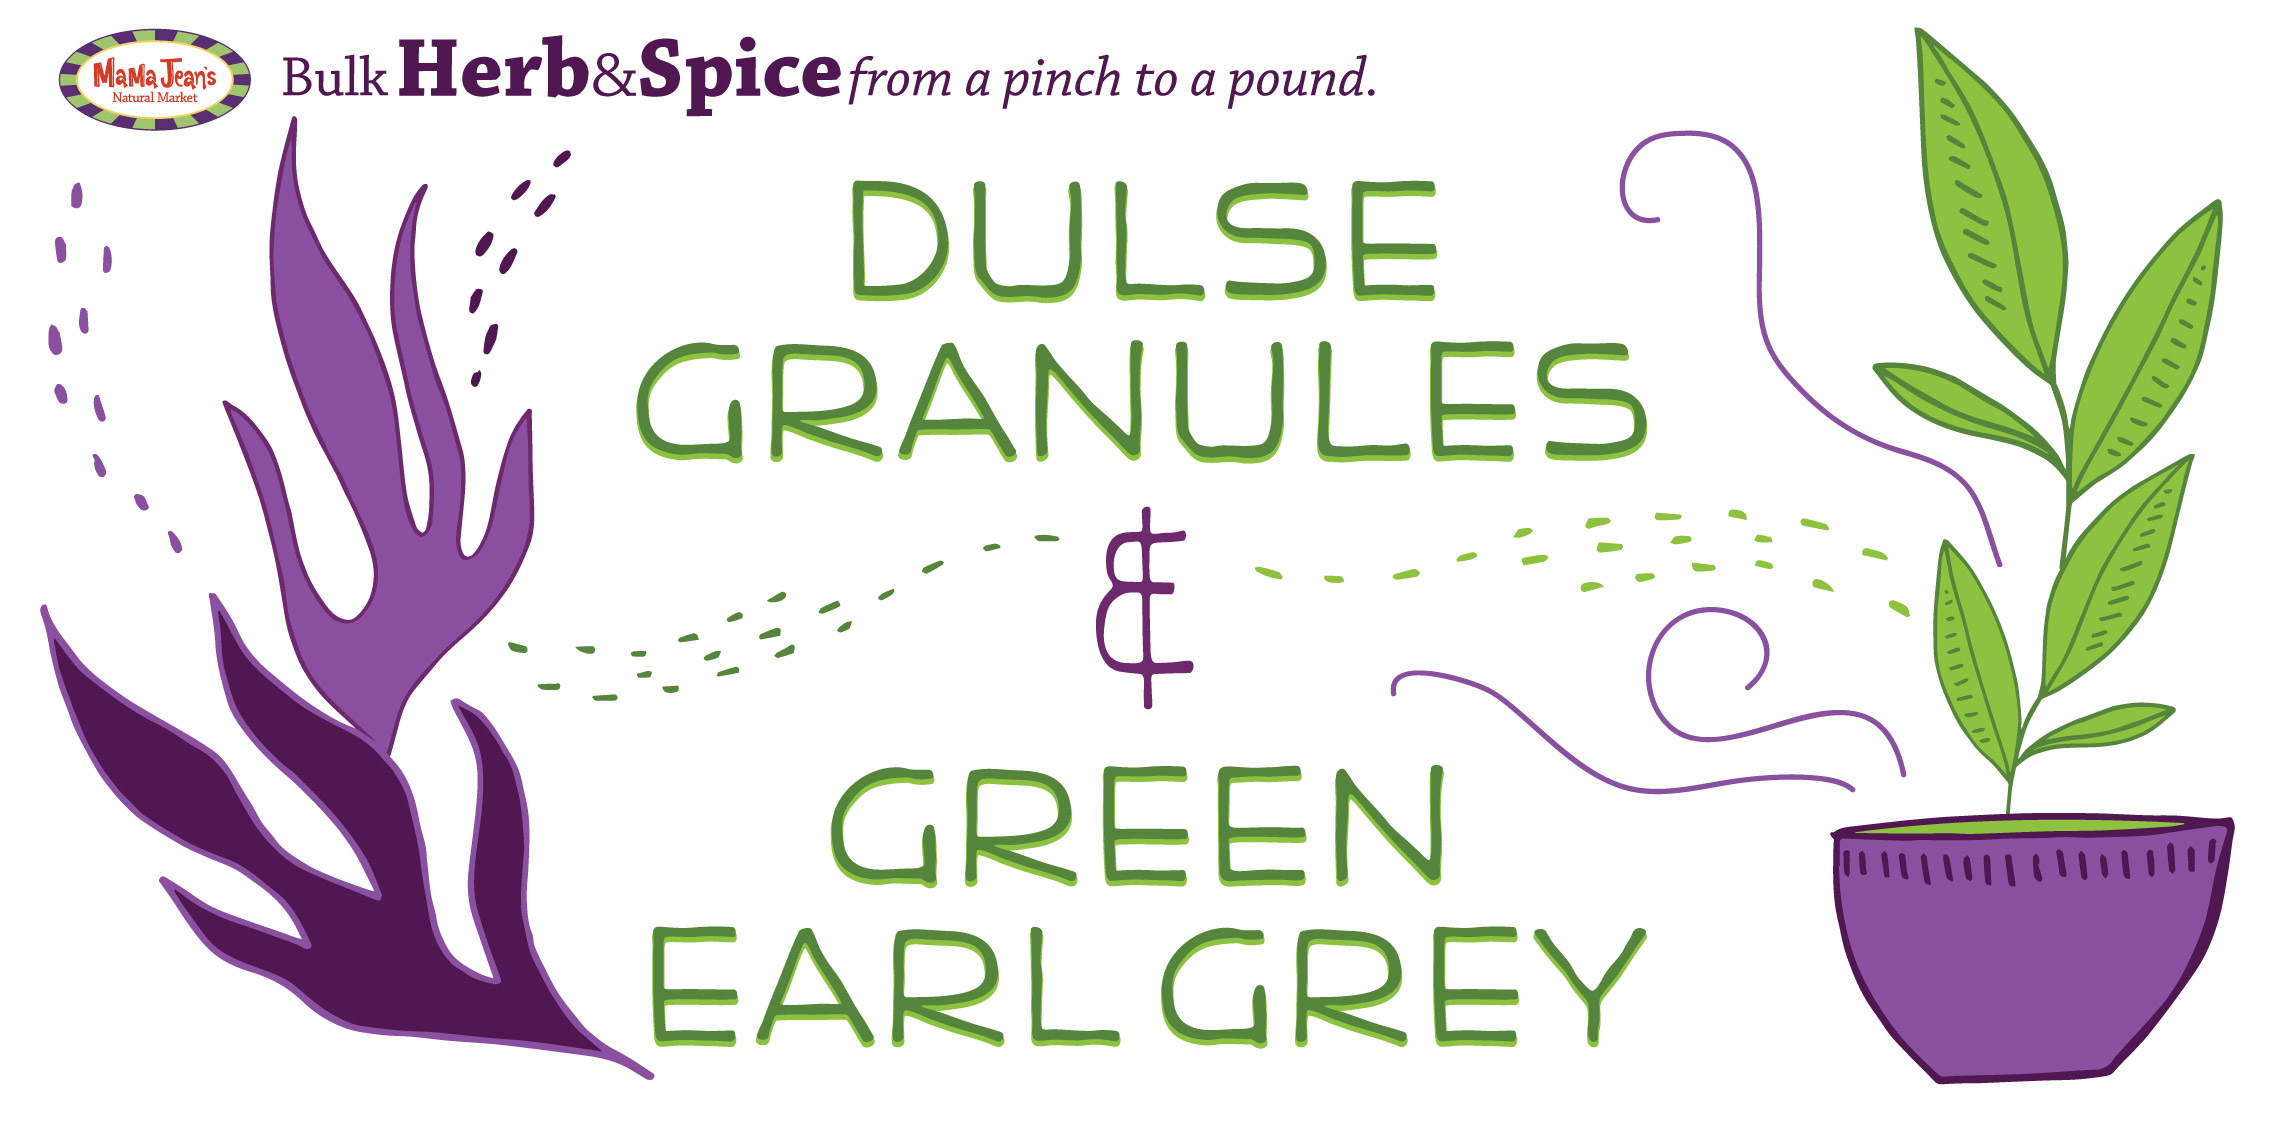 Dulse granules & green earl grey tea